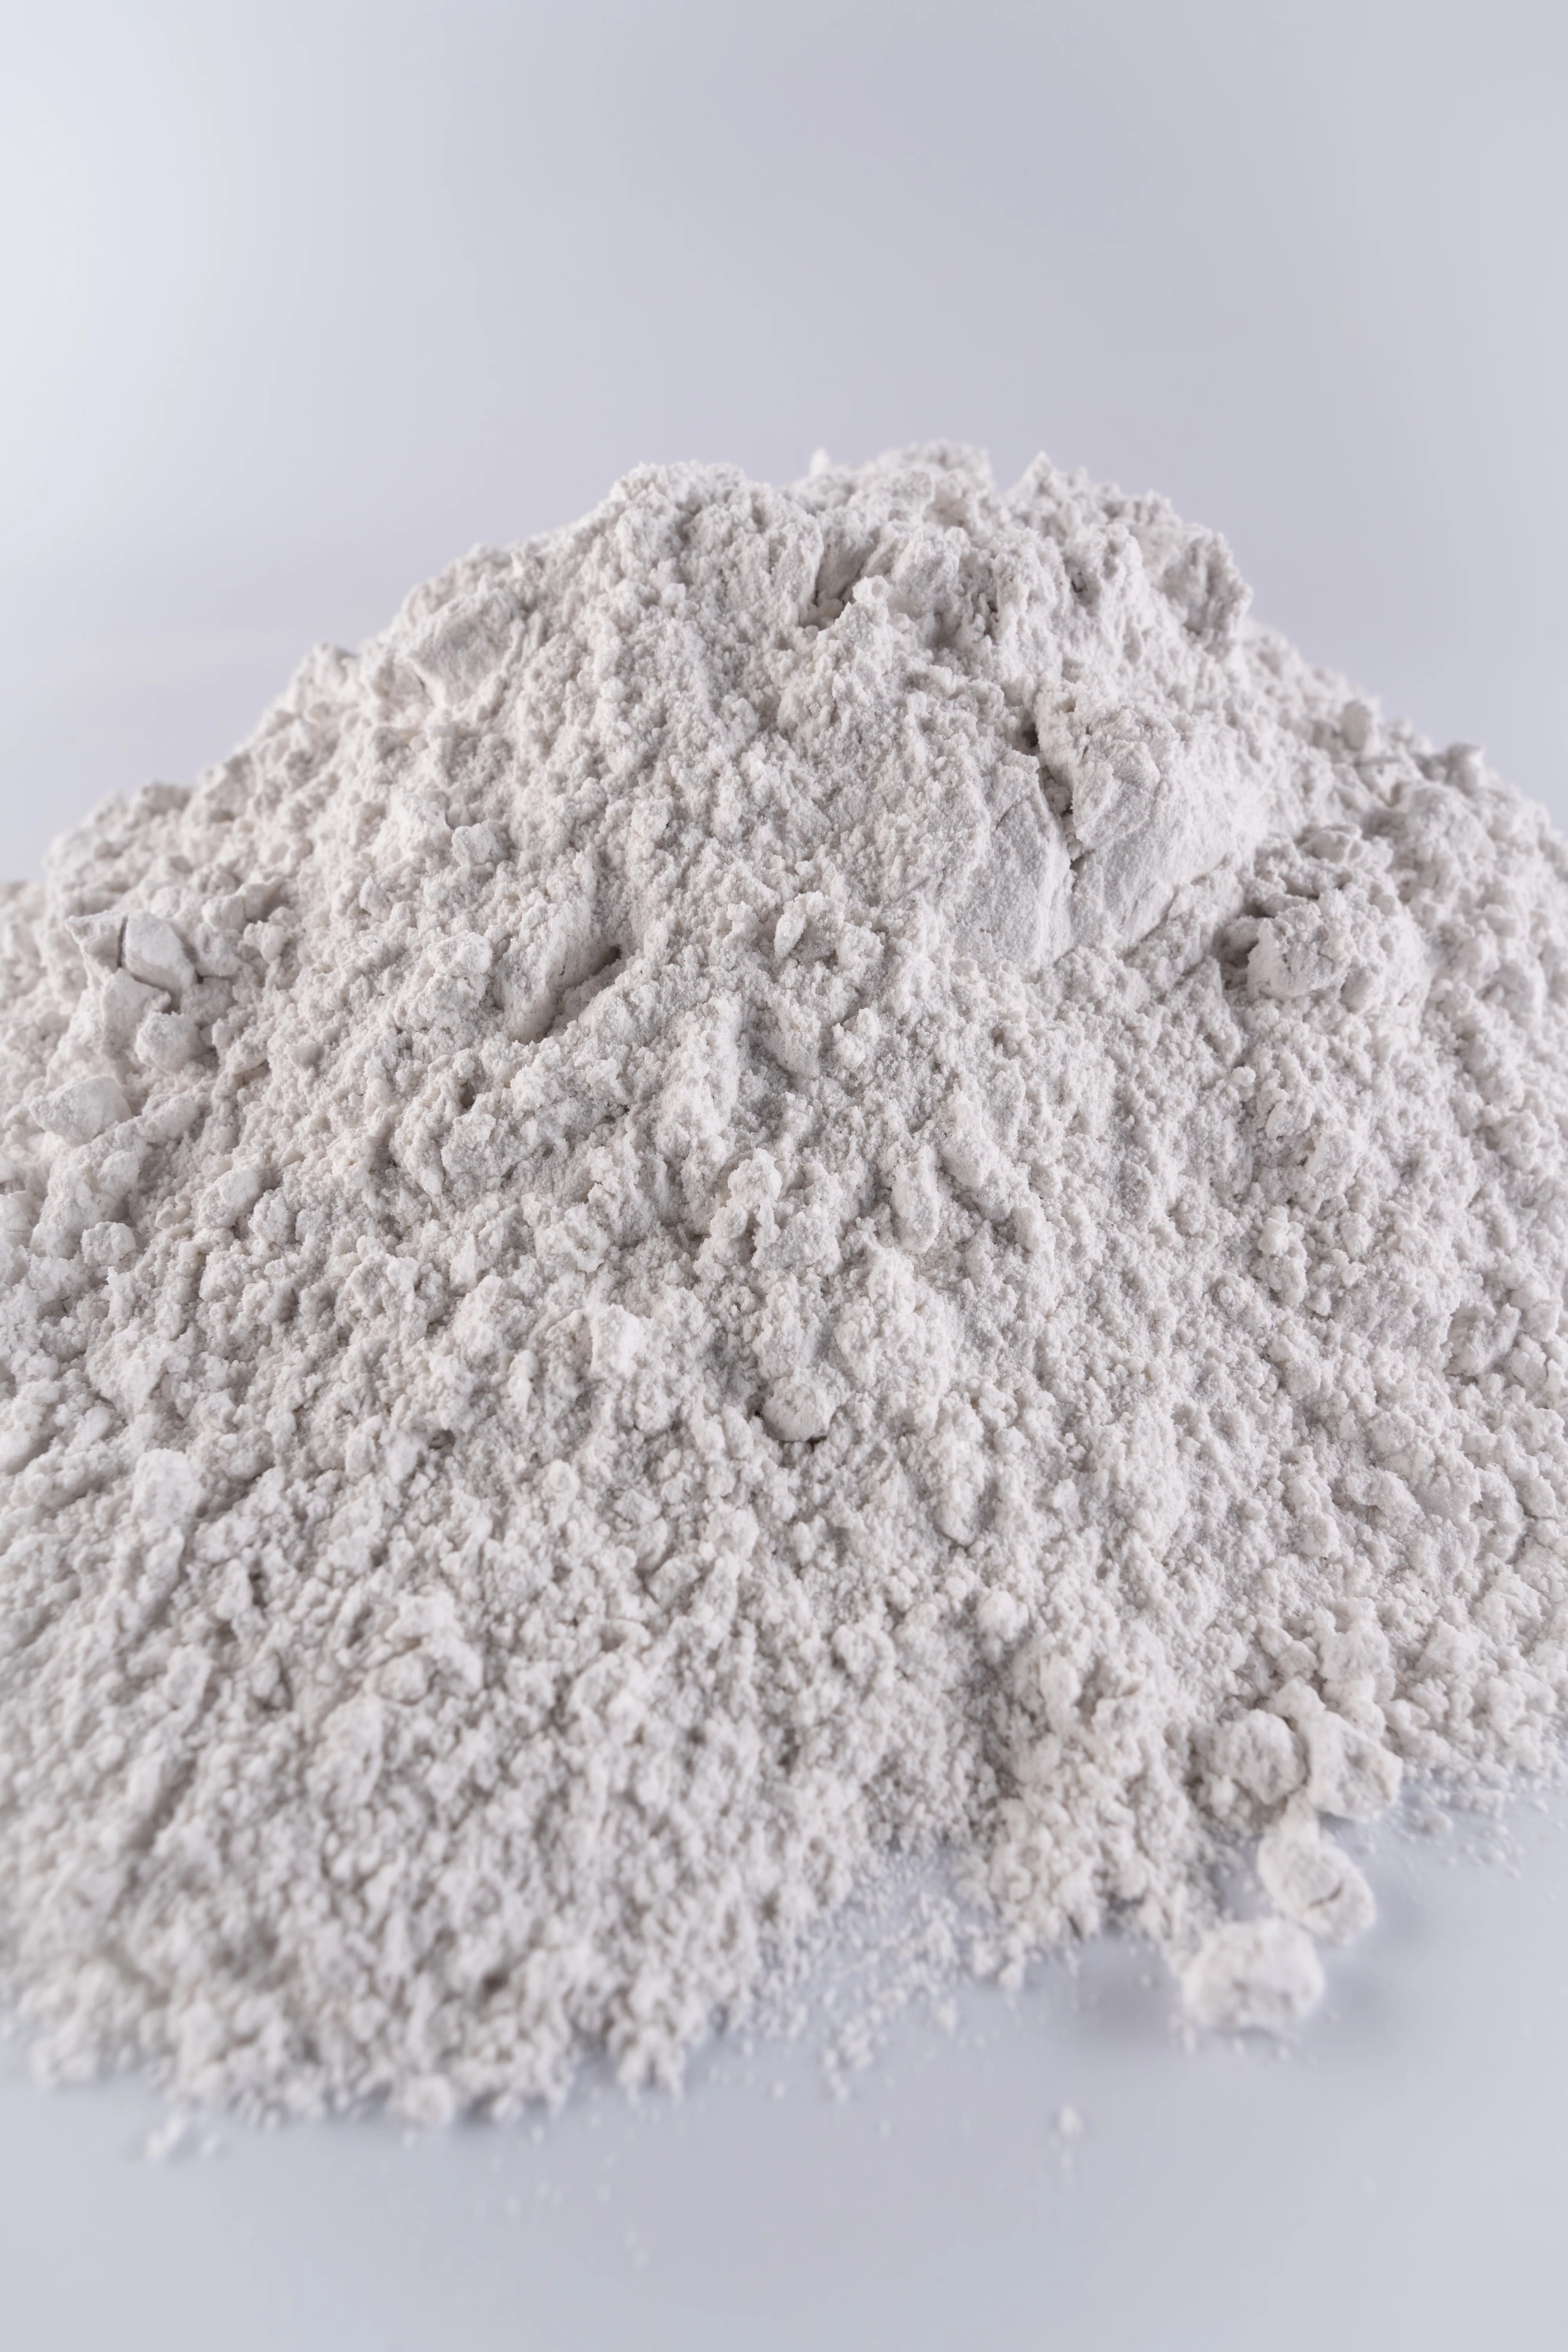 High purity Caf2 99.5% fluorite ore calcium fluorite lump fluorite power